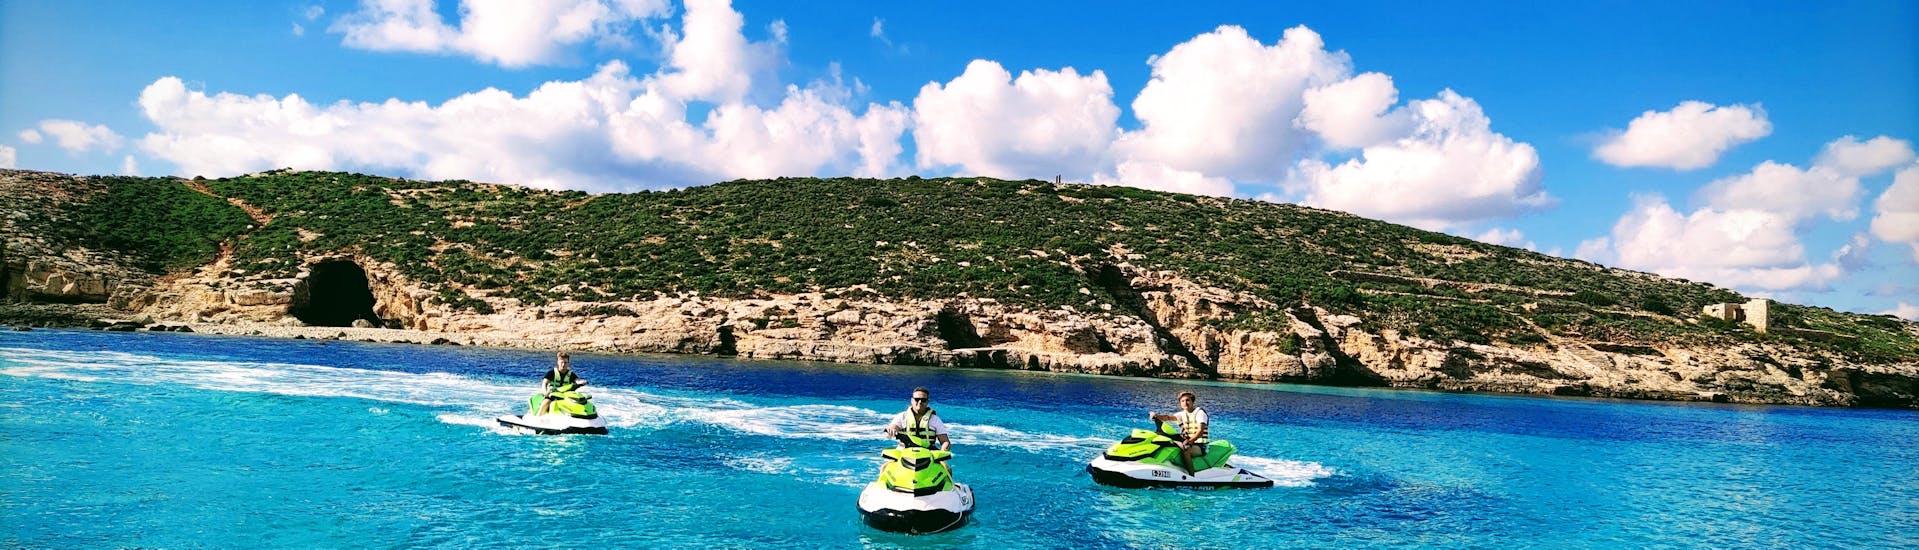 Moto de agua en Qala - Blue Lagoon Malta.